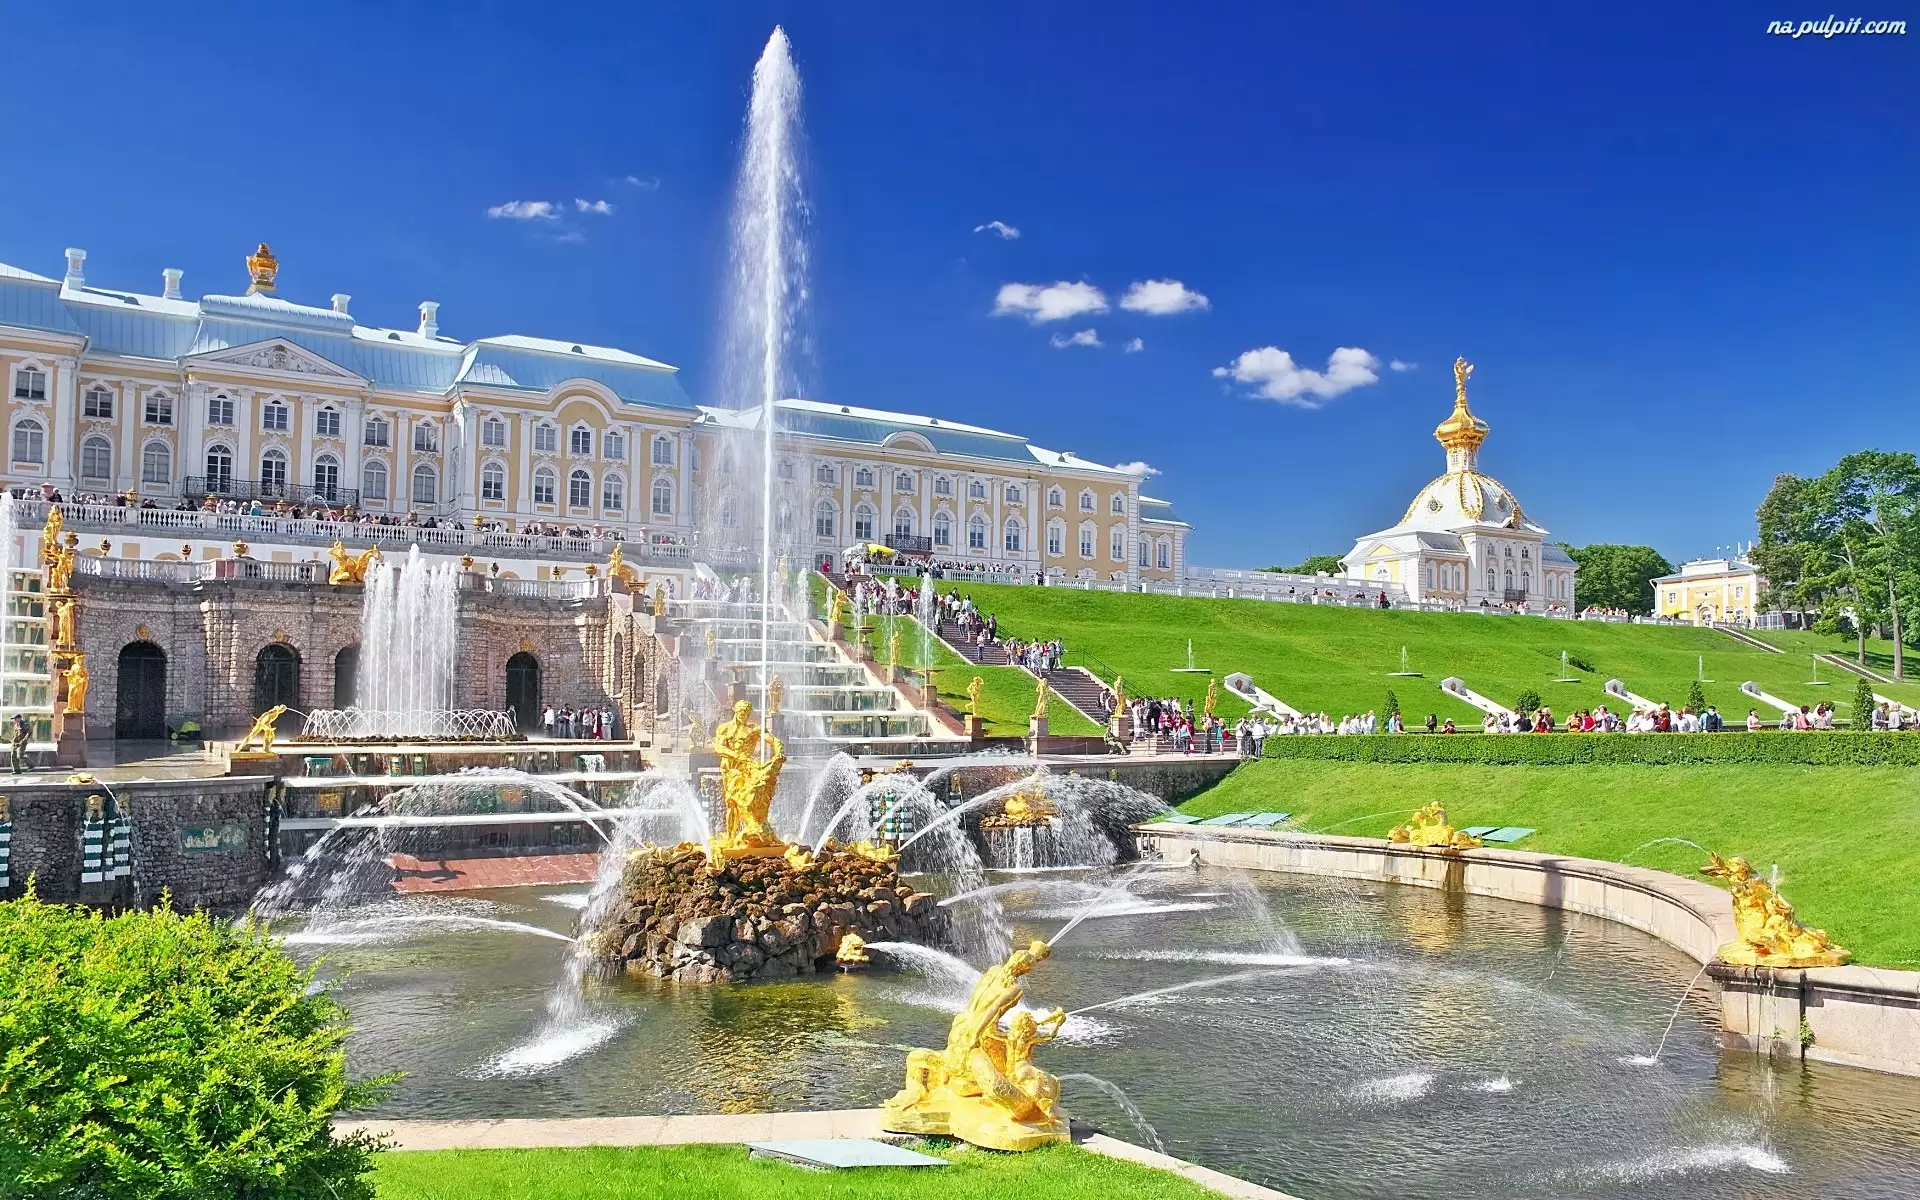 Rosja, Pałac, Fontanna, Zabytek, St Petersburg